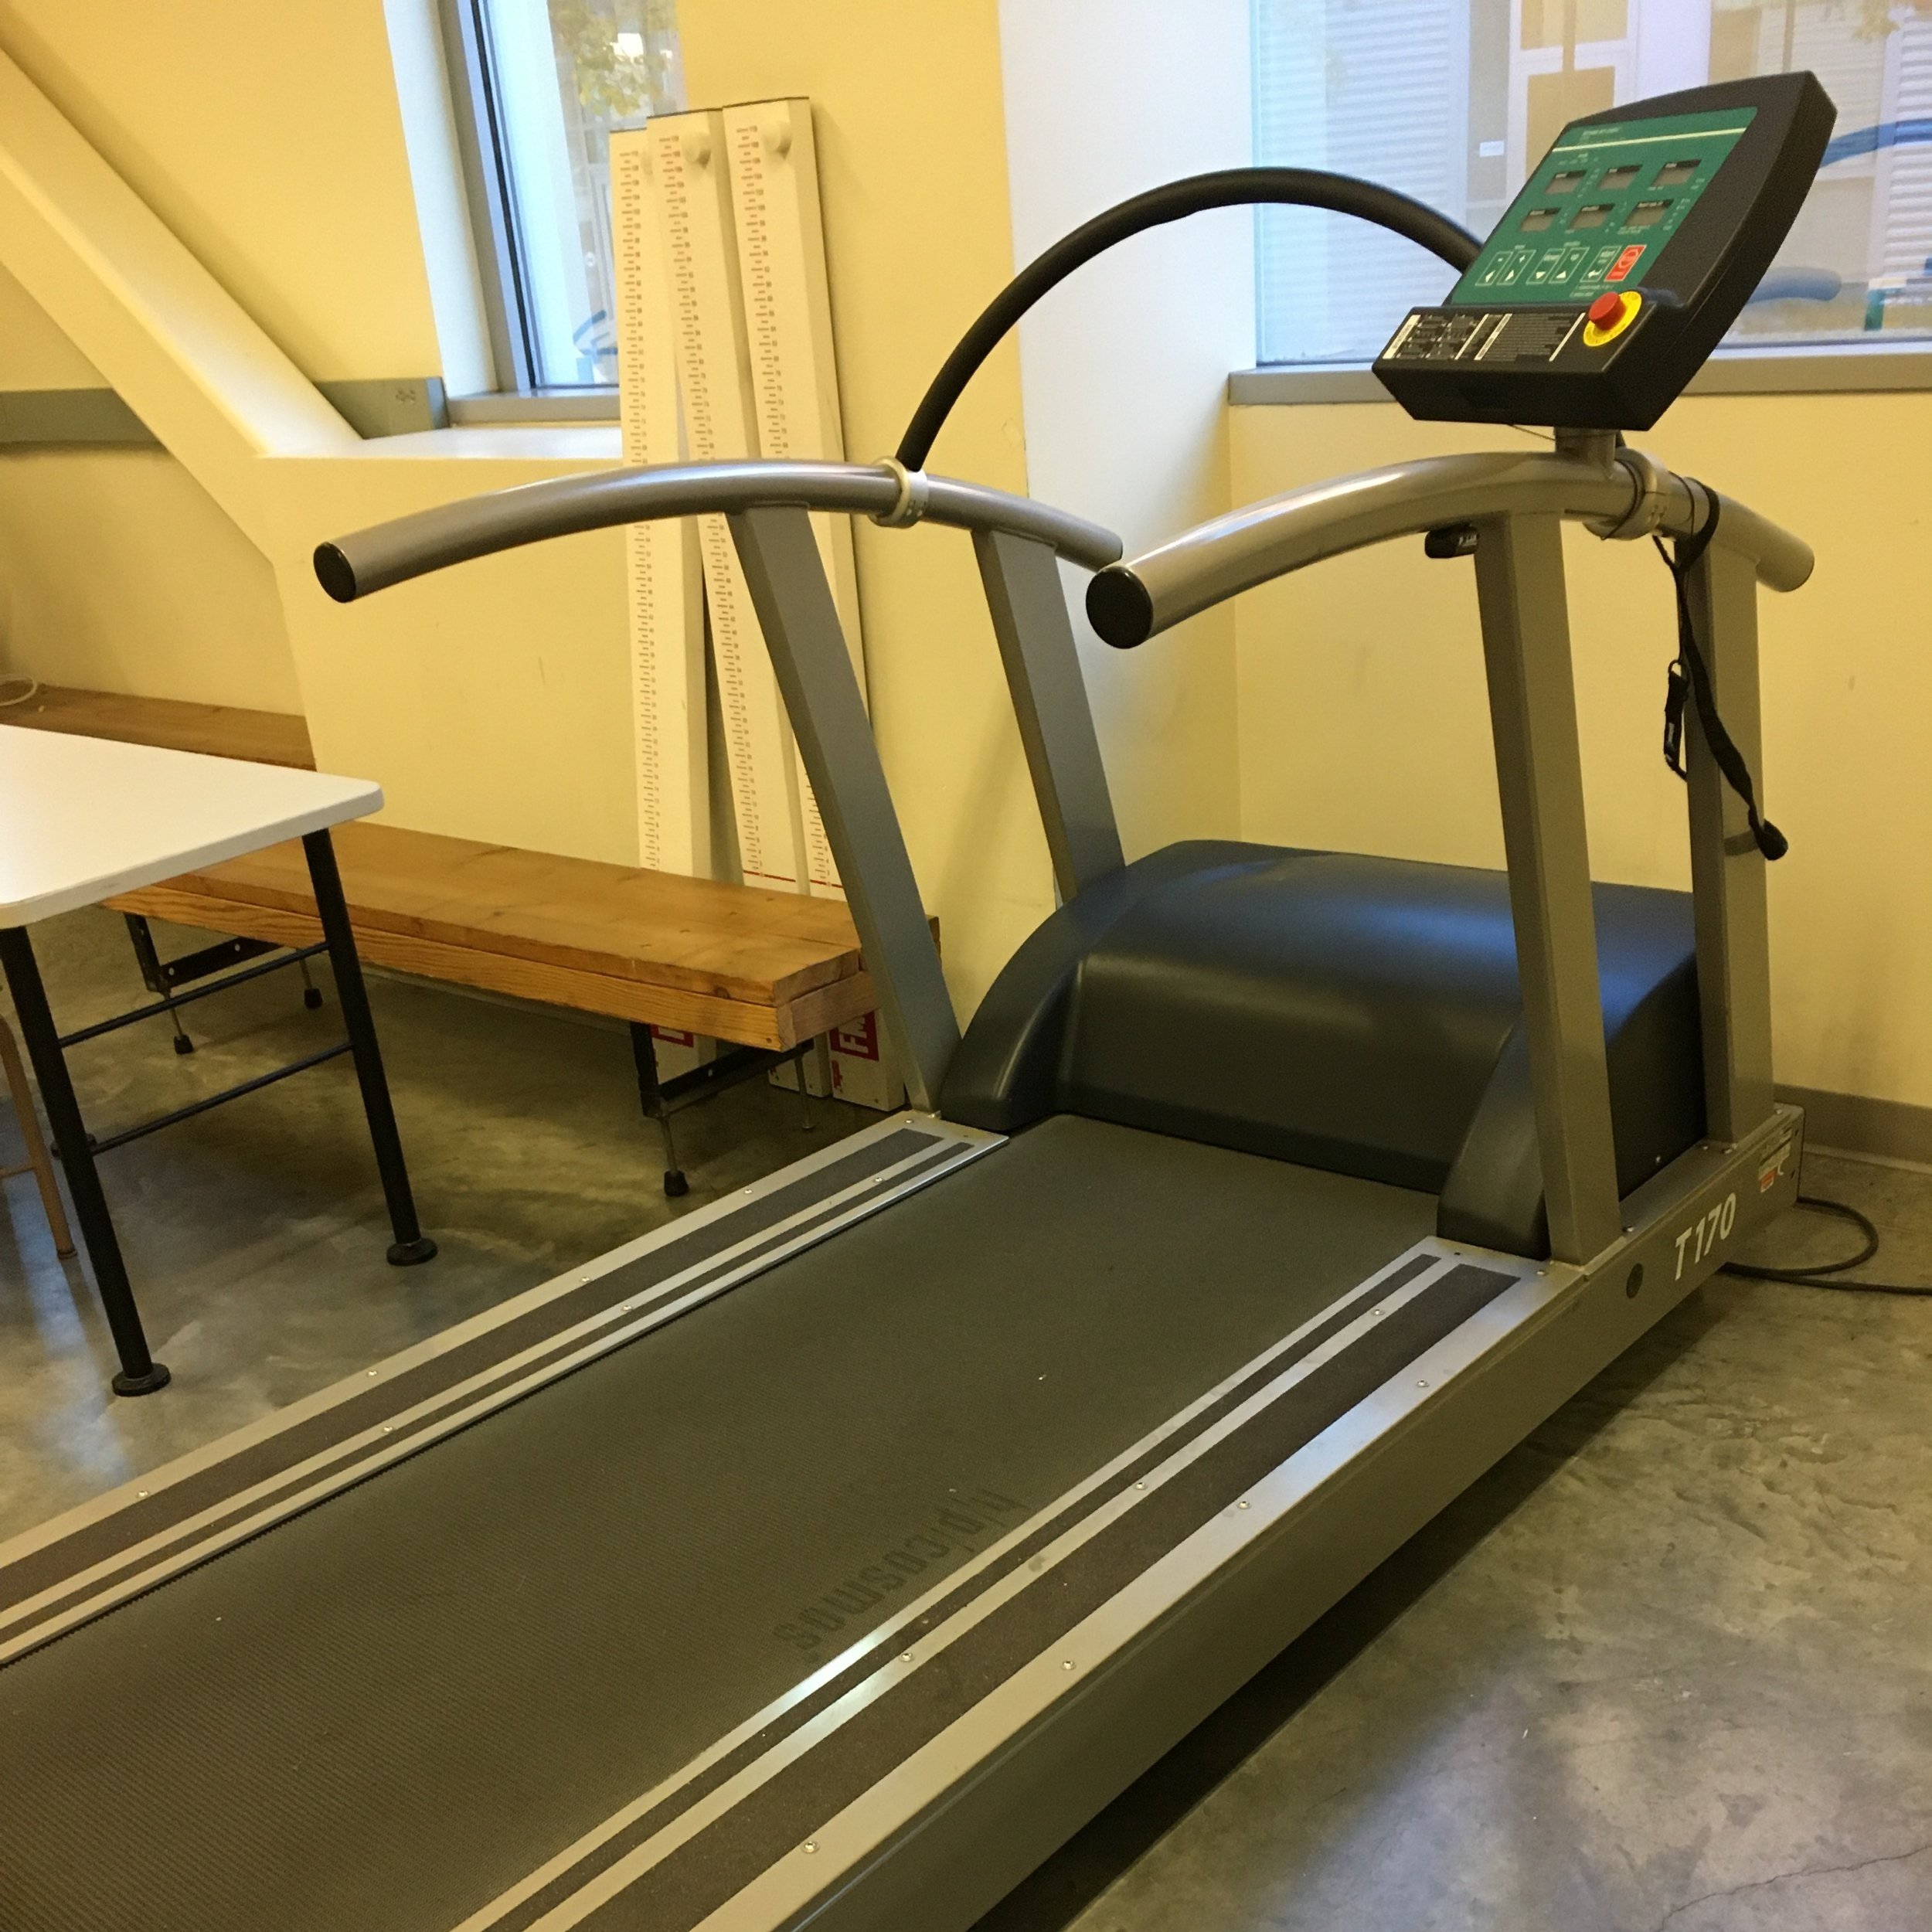 Research treadmill